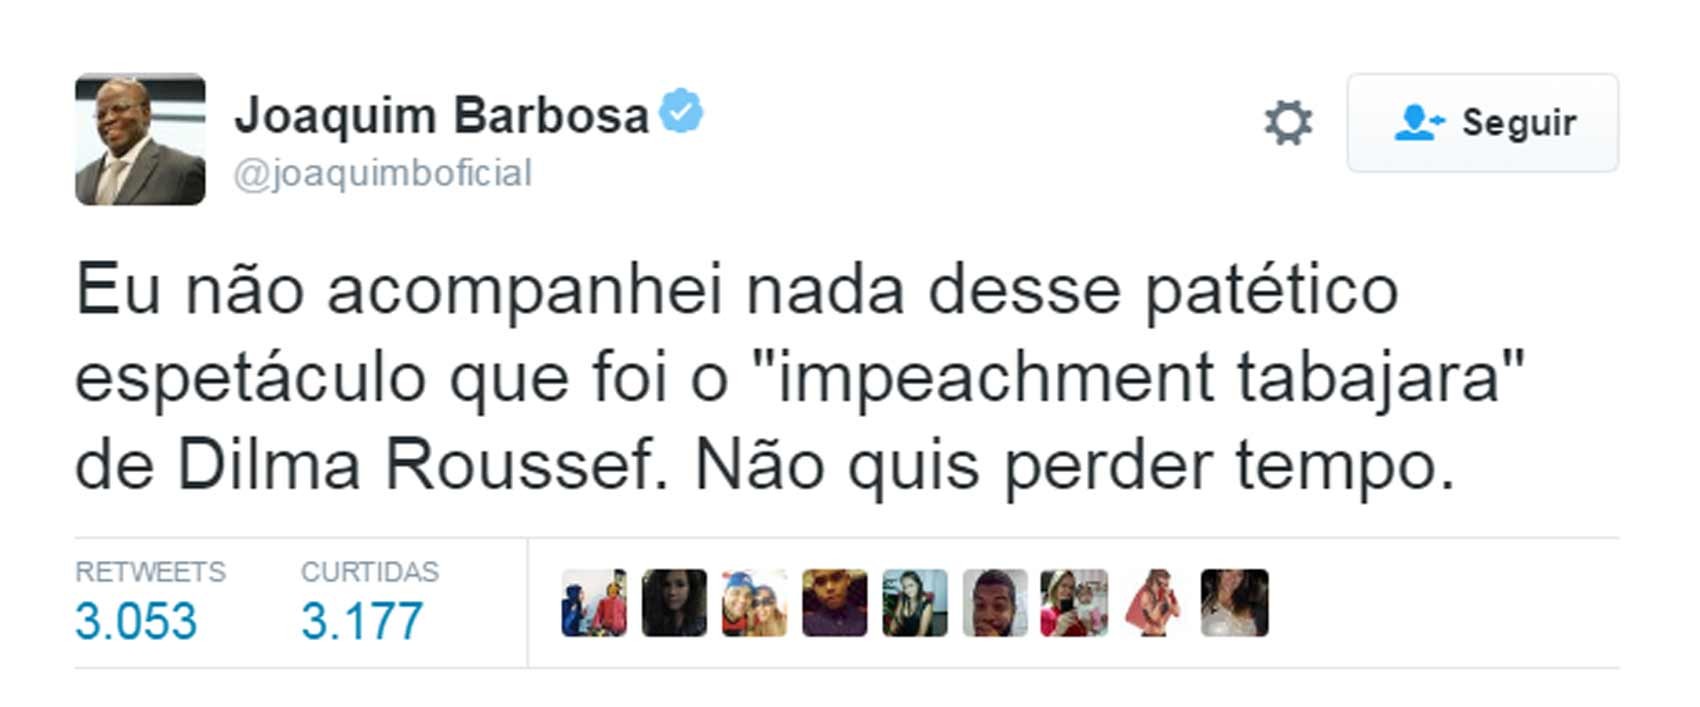 Joaquim Barbosa se pronuncia sobre impeachment no Twitter